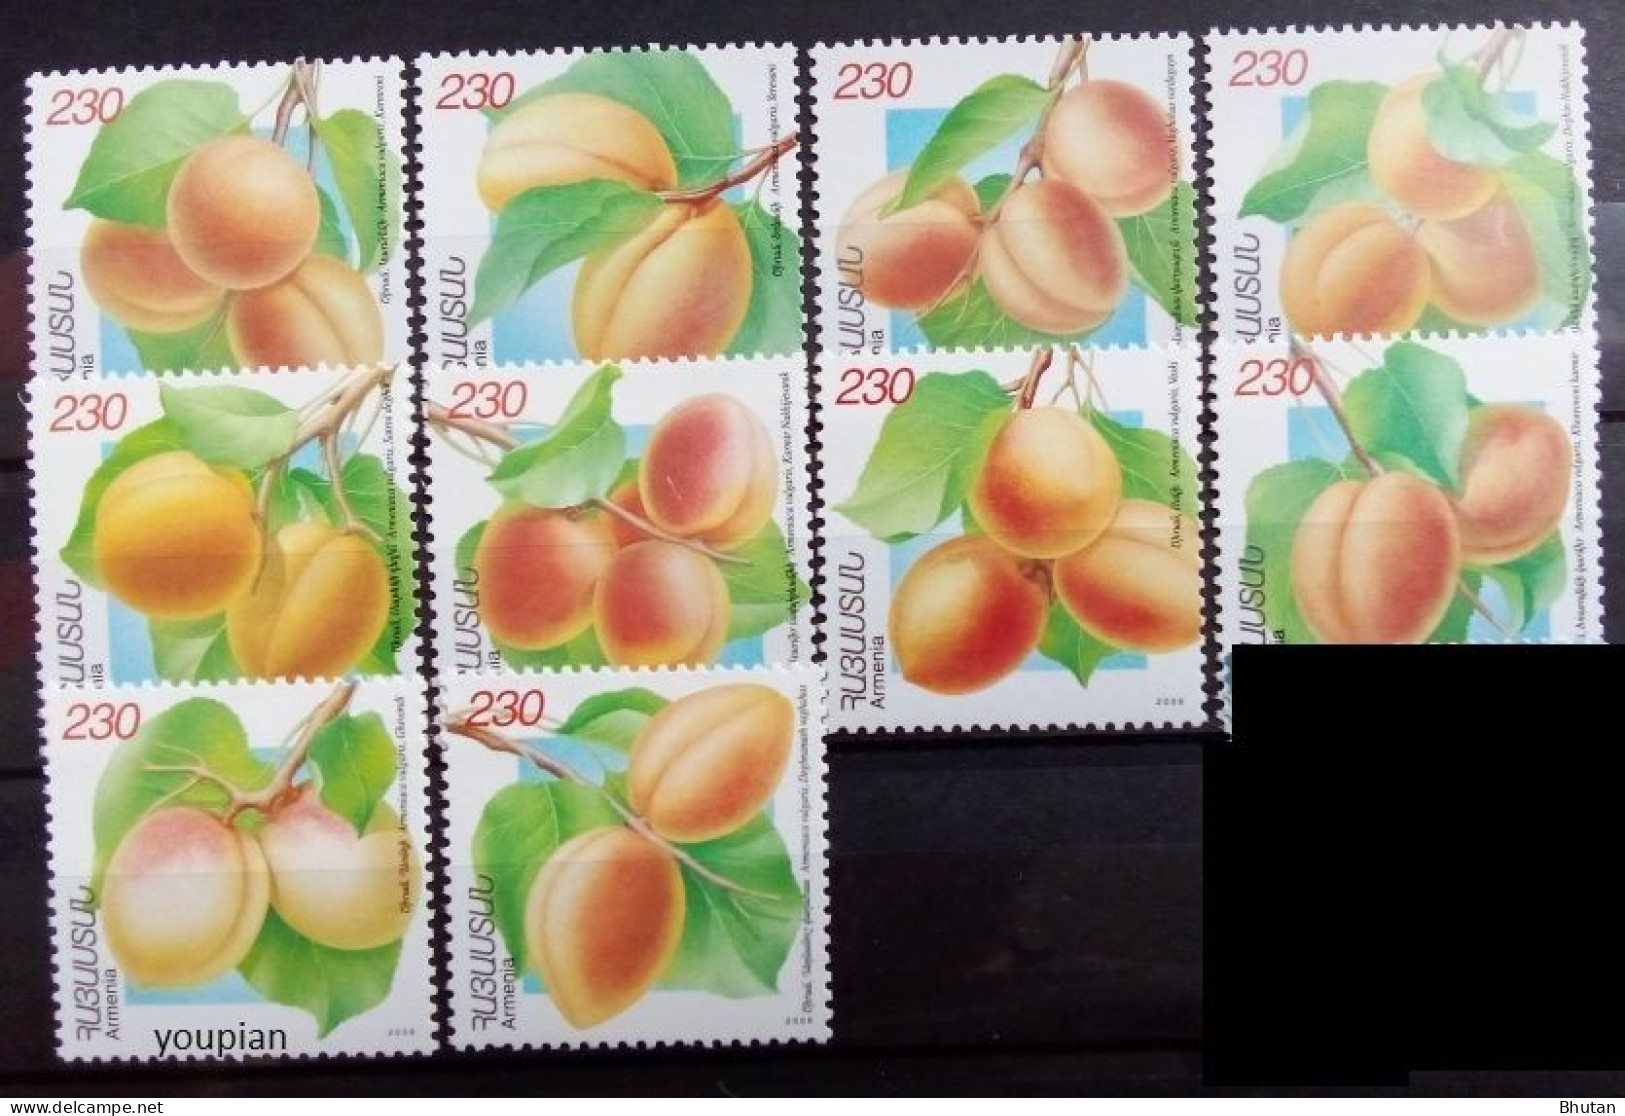 Armenia 2007, Apricots, MNH Stamps Set - Armenia